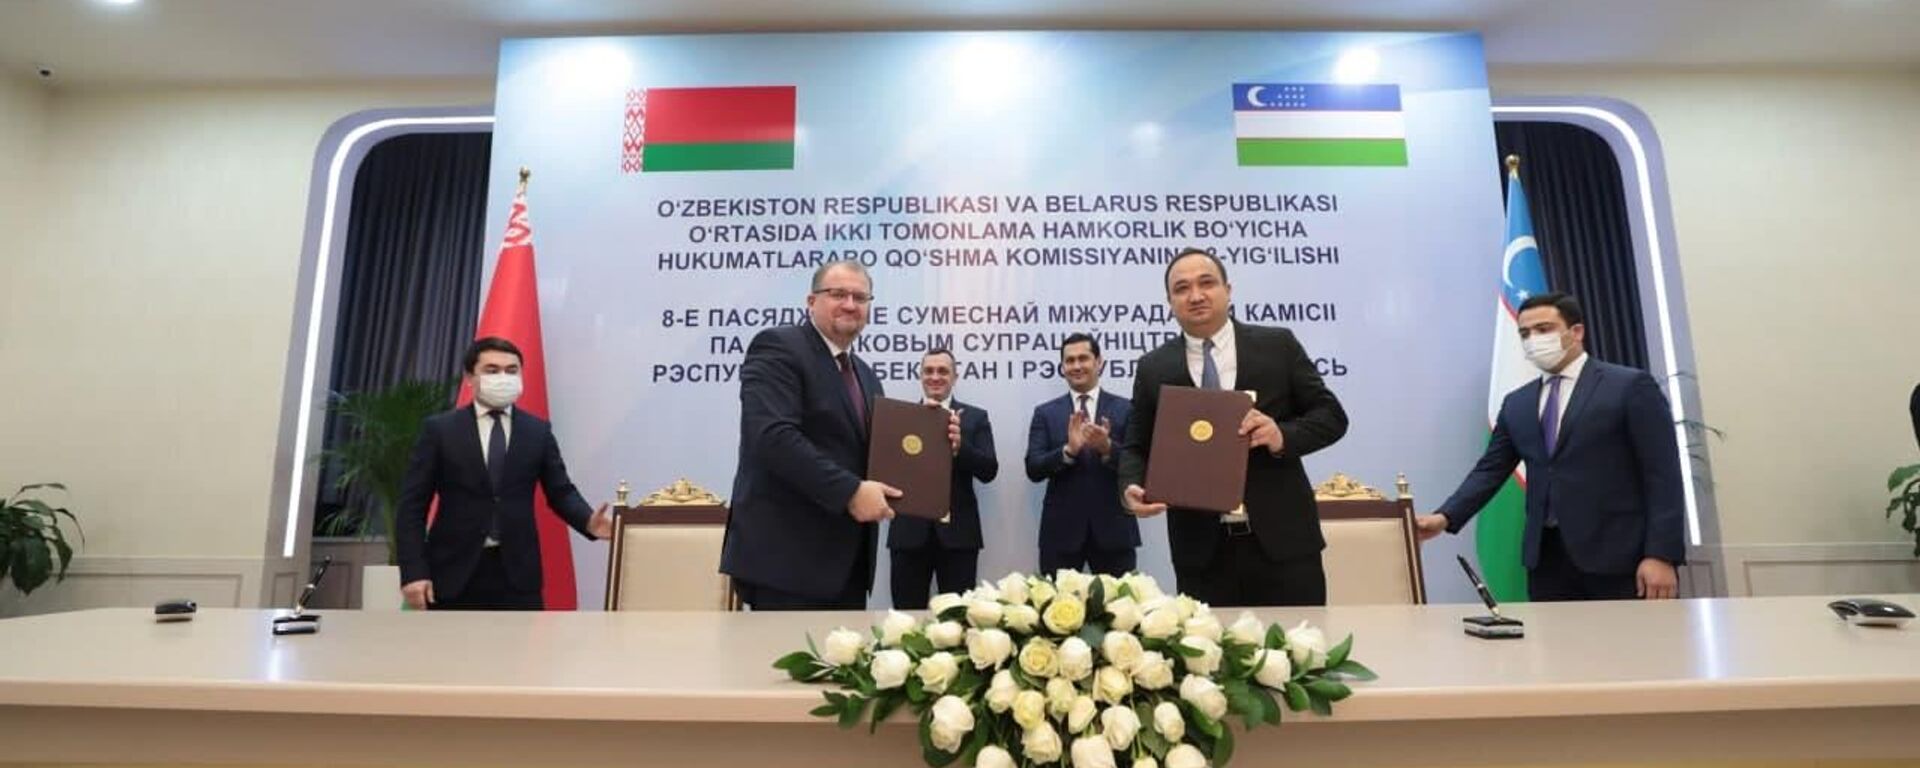 Узбекистан и Беларусь подписали соглашение о сотрудничестве в сфере туризма - Sputnik Узбекистан, 1920, 10.03.2021